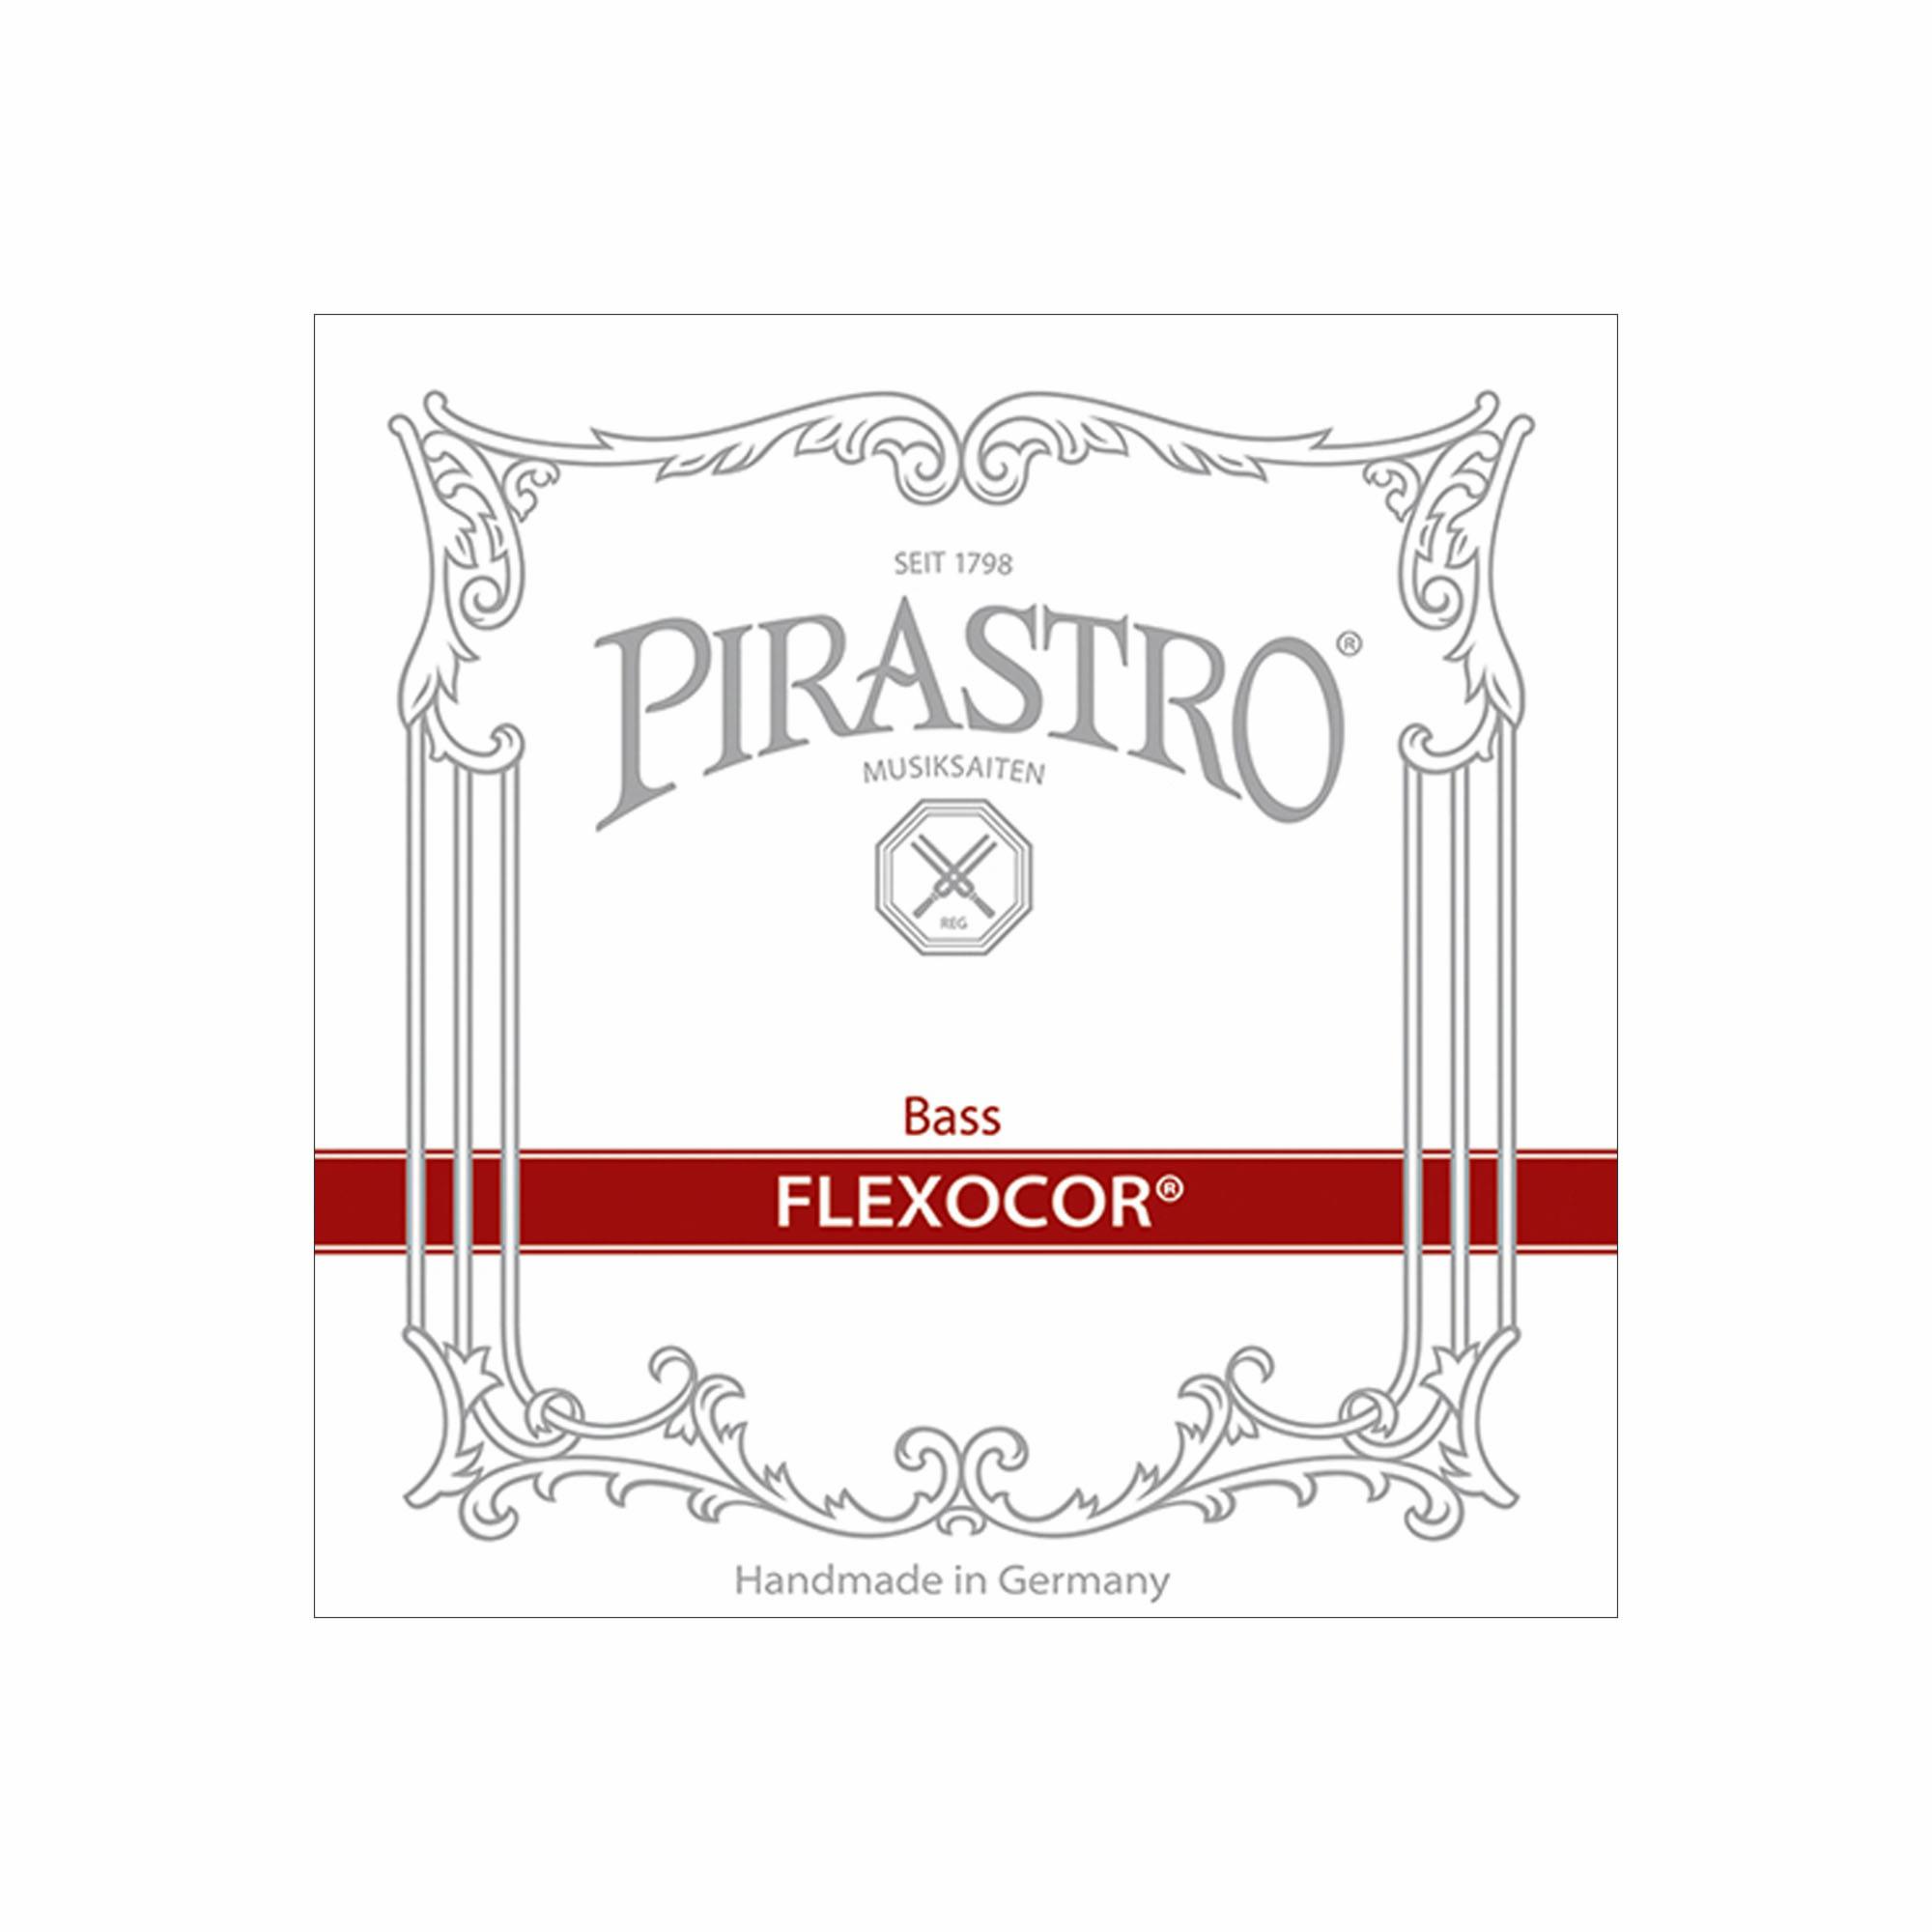 Pirastro Flexocor Orchestra Tuning Bass Strings